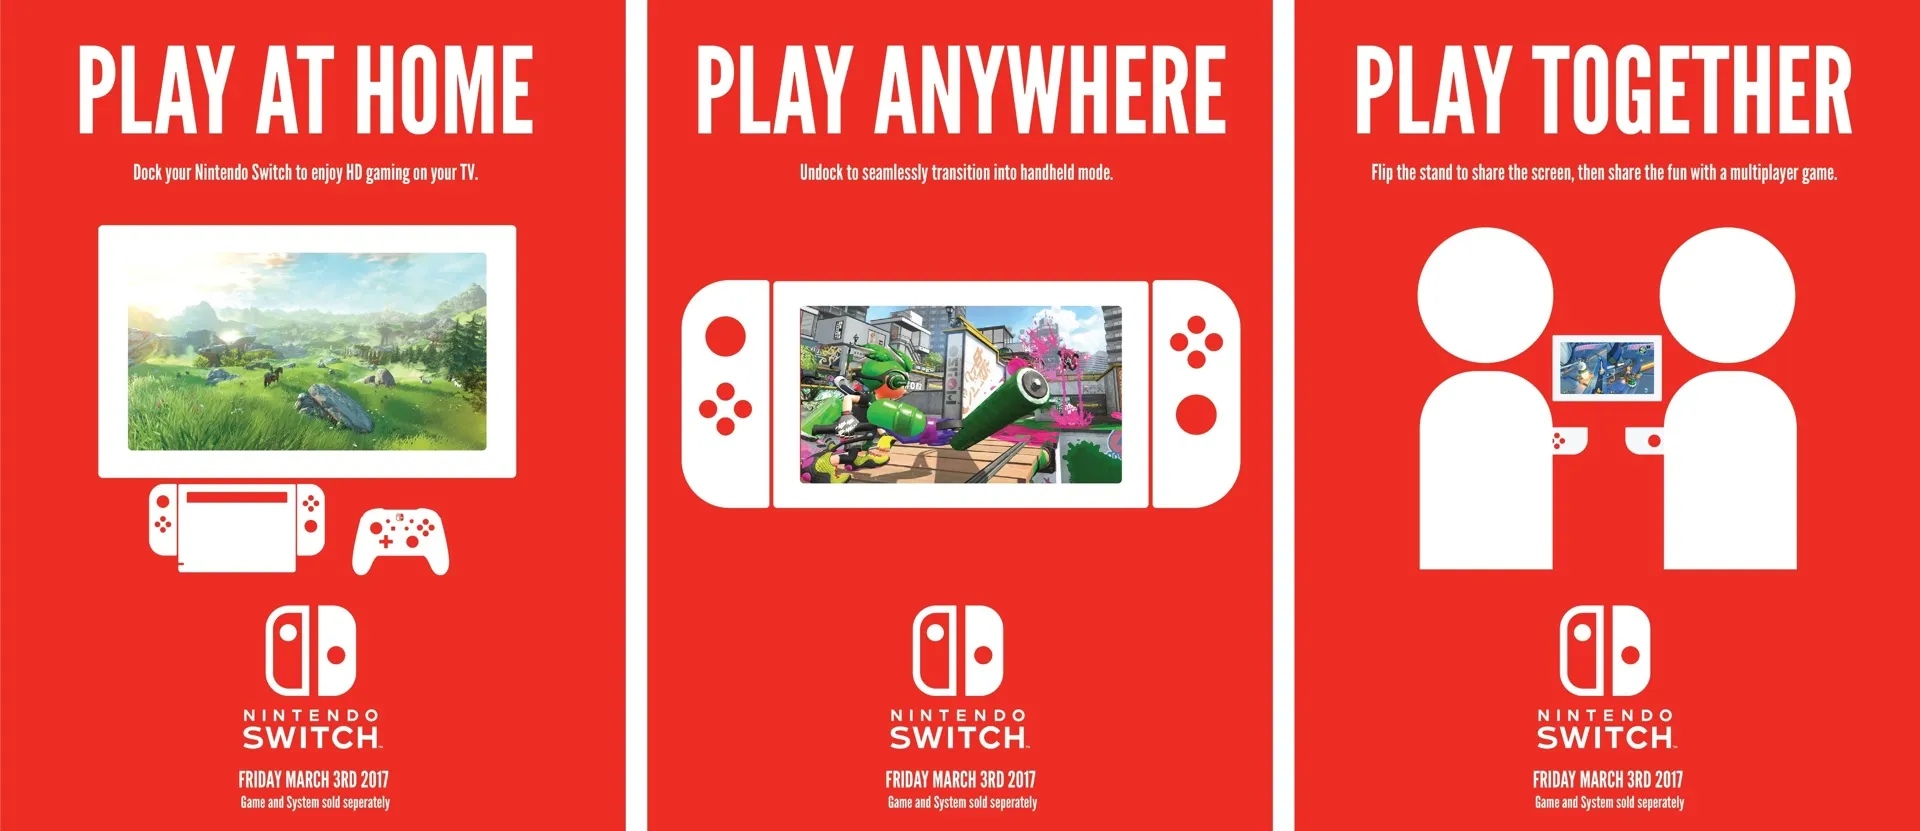 Nintendo Switch ad